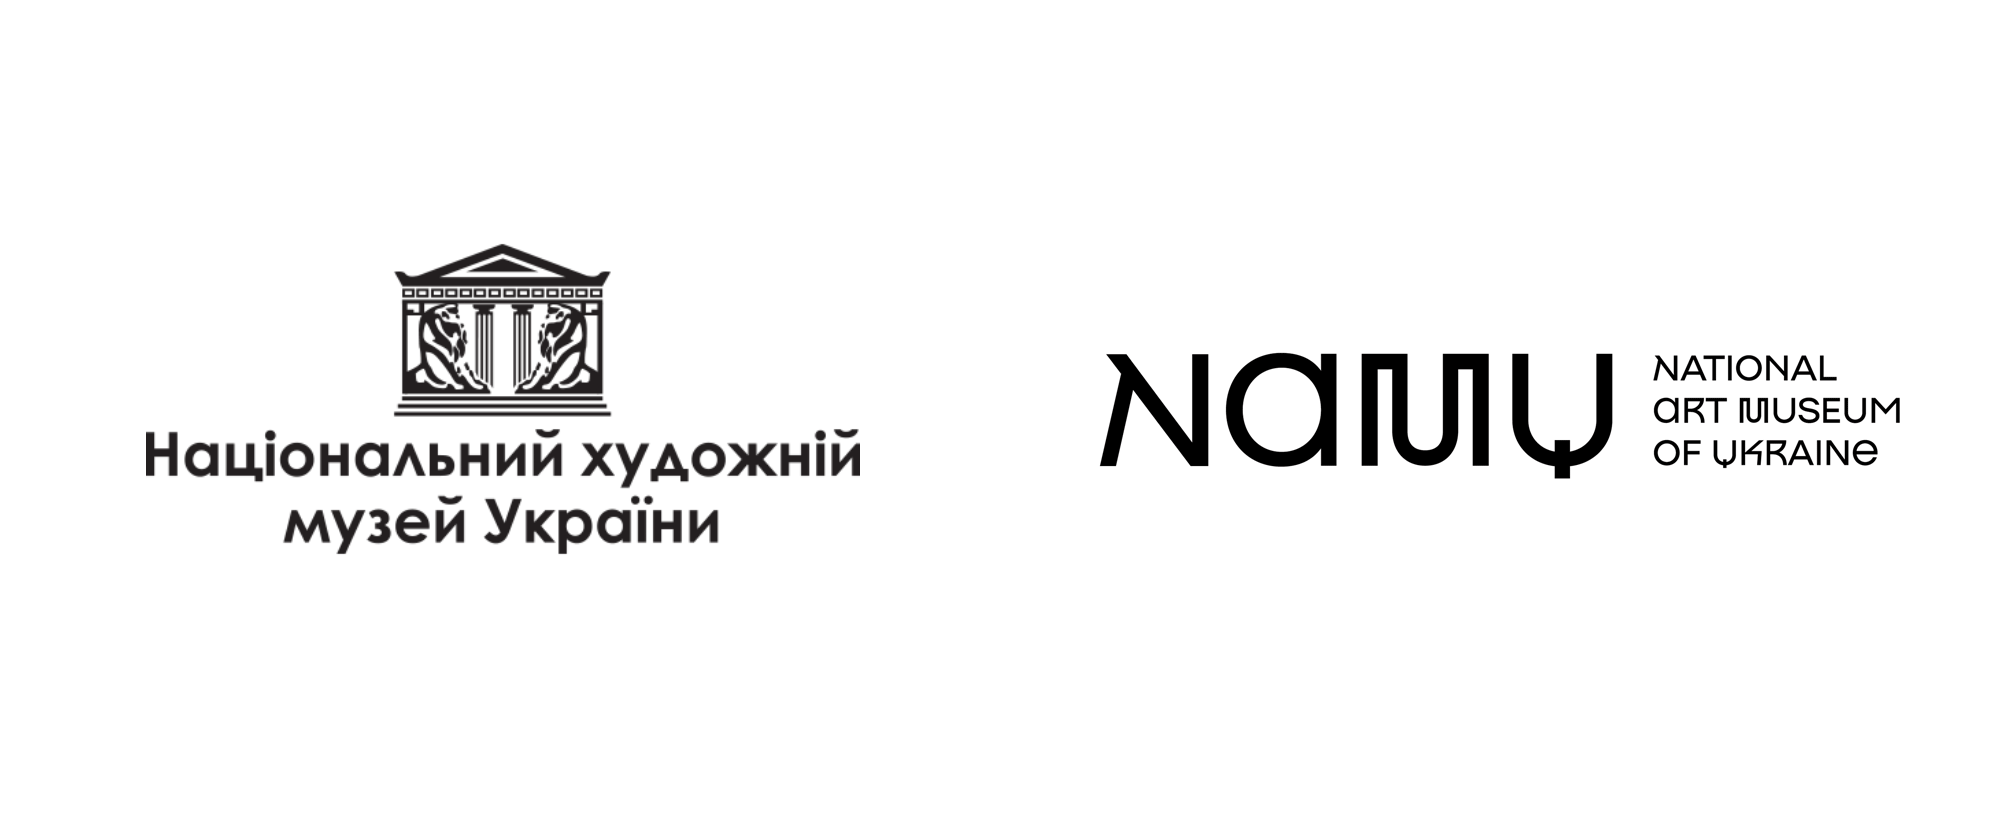 Ukraine Logo - Brand New: New Logo and Identity for National Art Museum of Ukraine ...